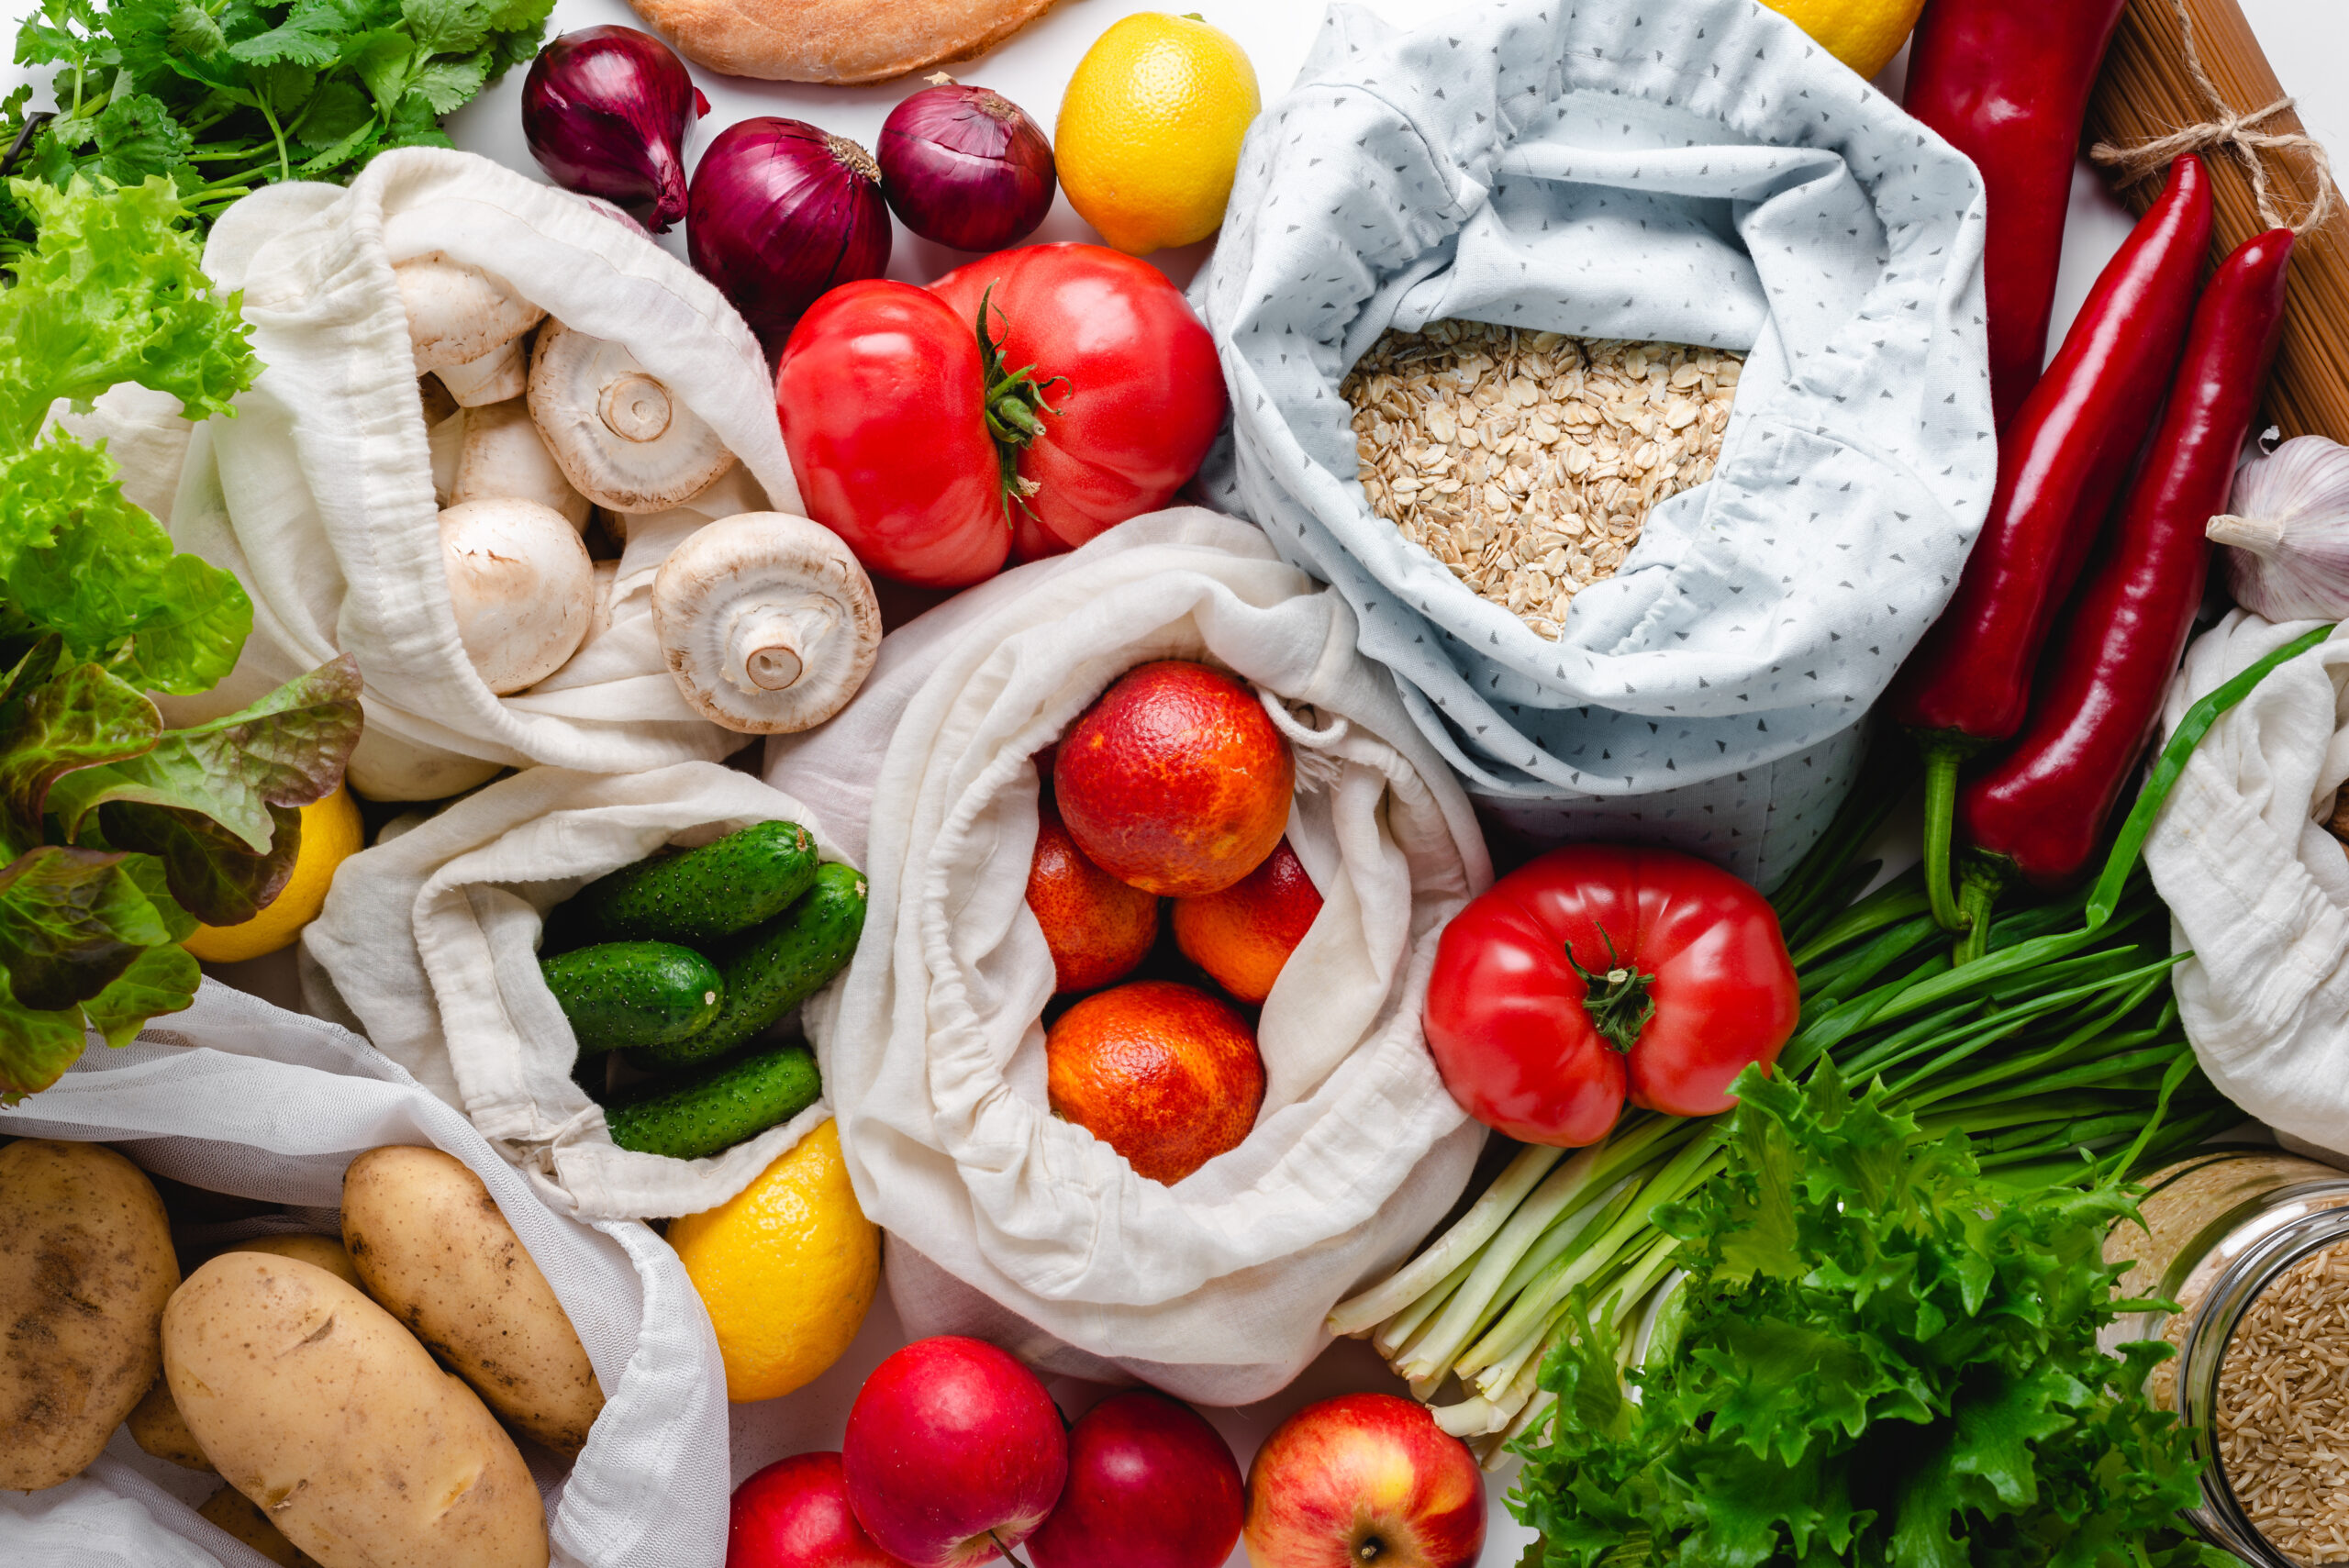 Variety of Fresh Whole Plant Foods Zero Waste Vegan Groceries